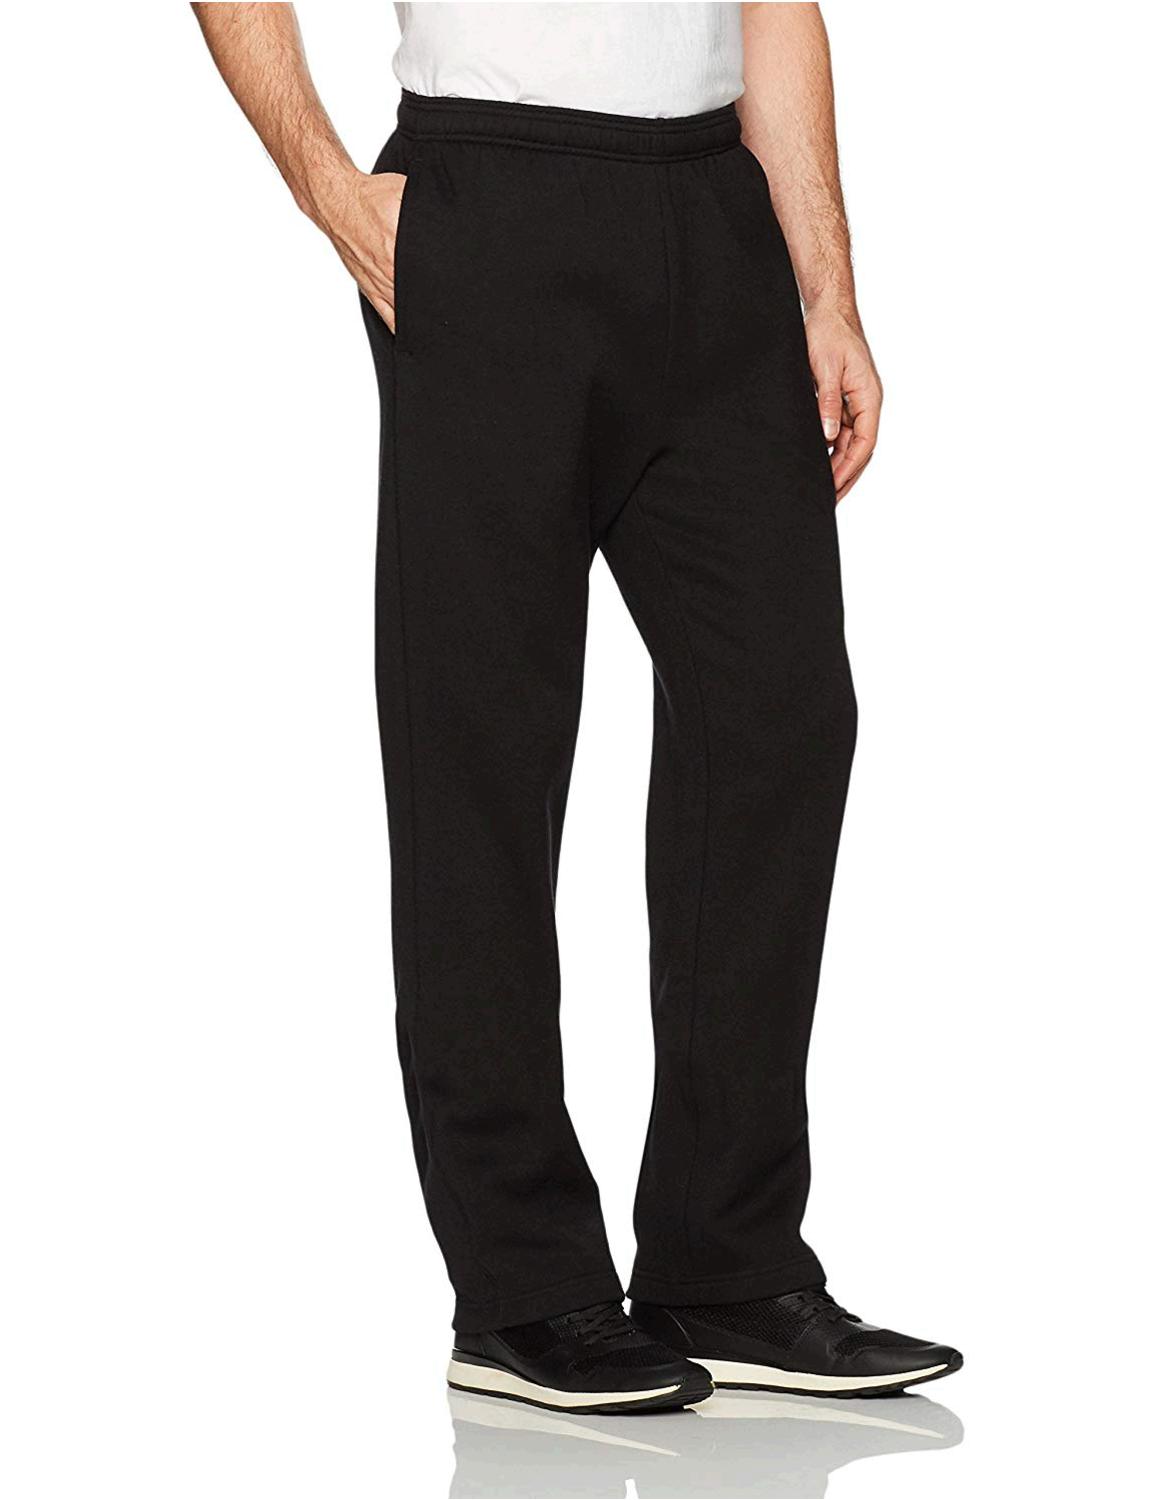 Amazon Essentials Men's Fleece Sweatpants, Black, XX-Large, Black, Size ...